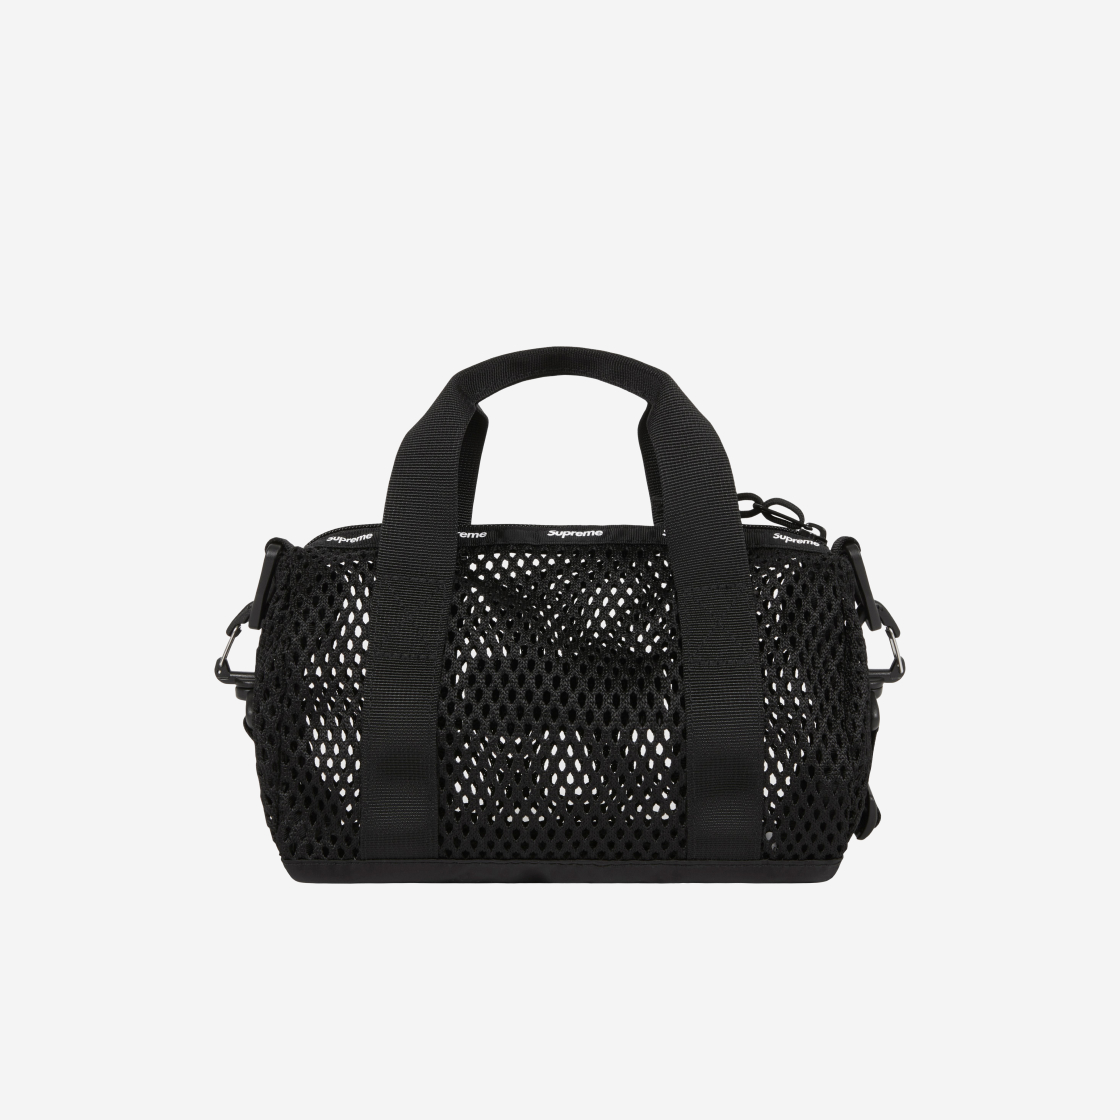 Supreme Mesh Mini Duffle Bag Black 23SS -